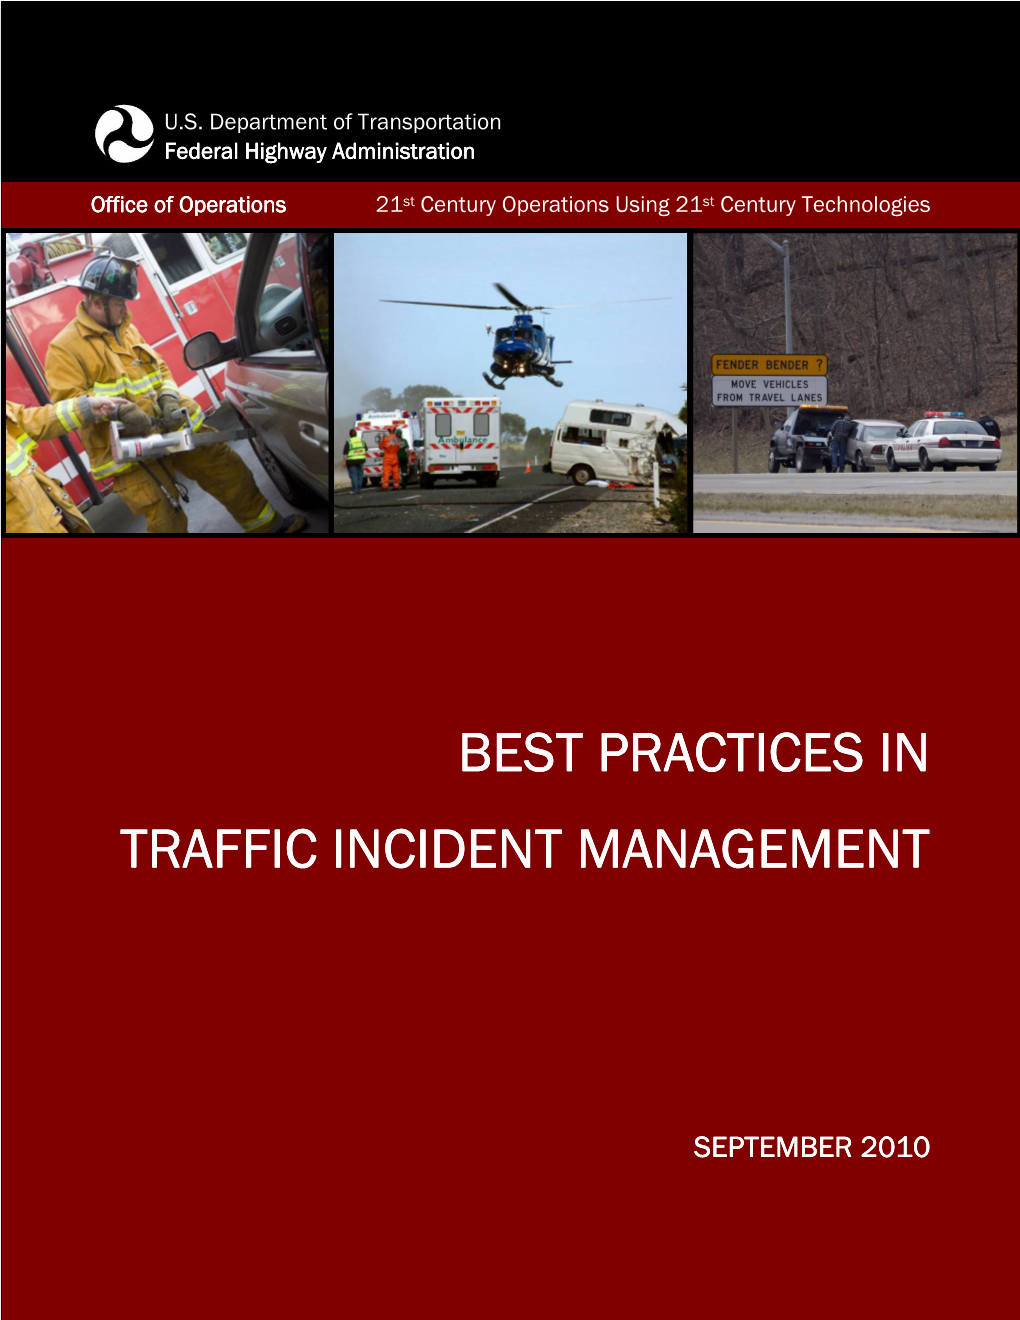 Best Practices in Traffic Incident Management